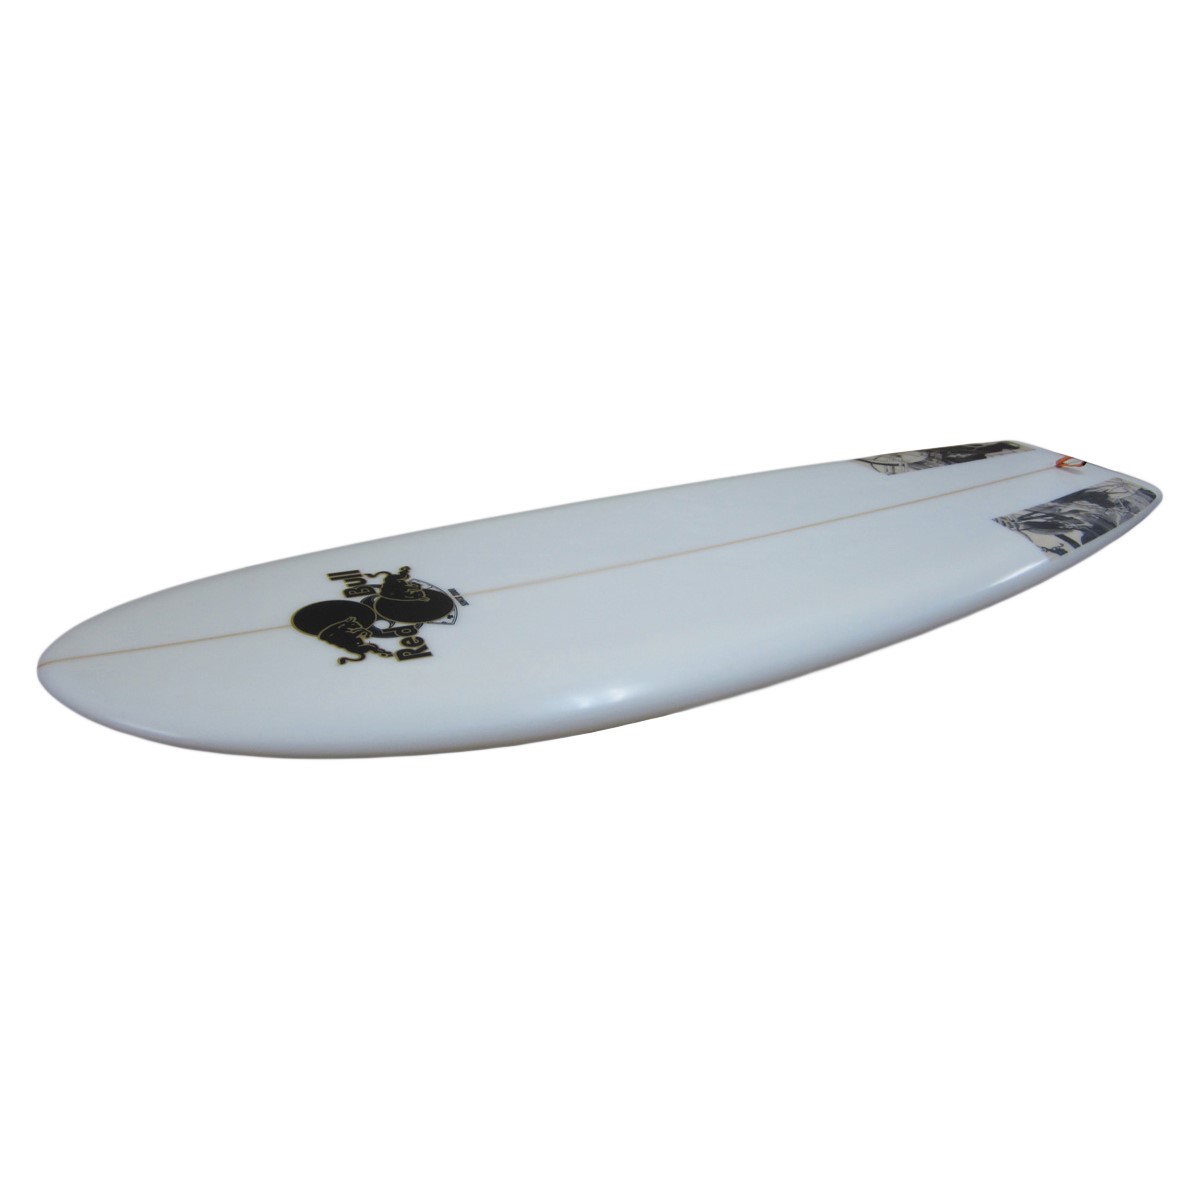 RAGE SURFBOARDS / GEEK 5'1 Shaped by Takuya 'TAPPY' Yoshikawa